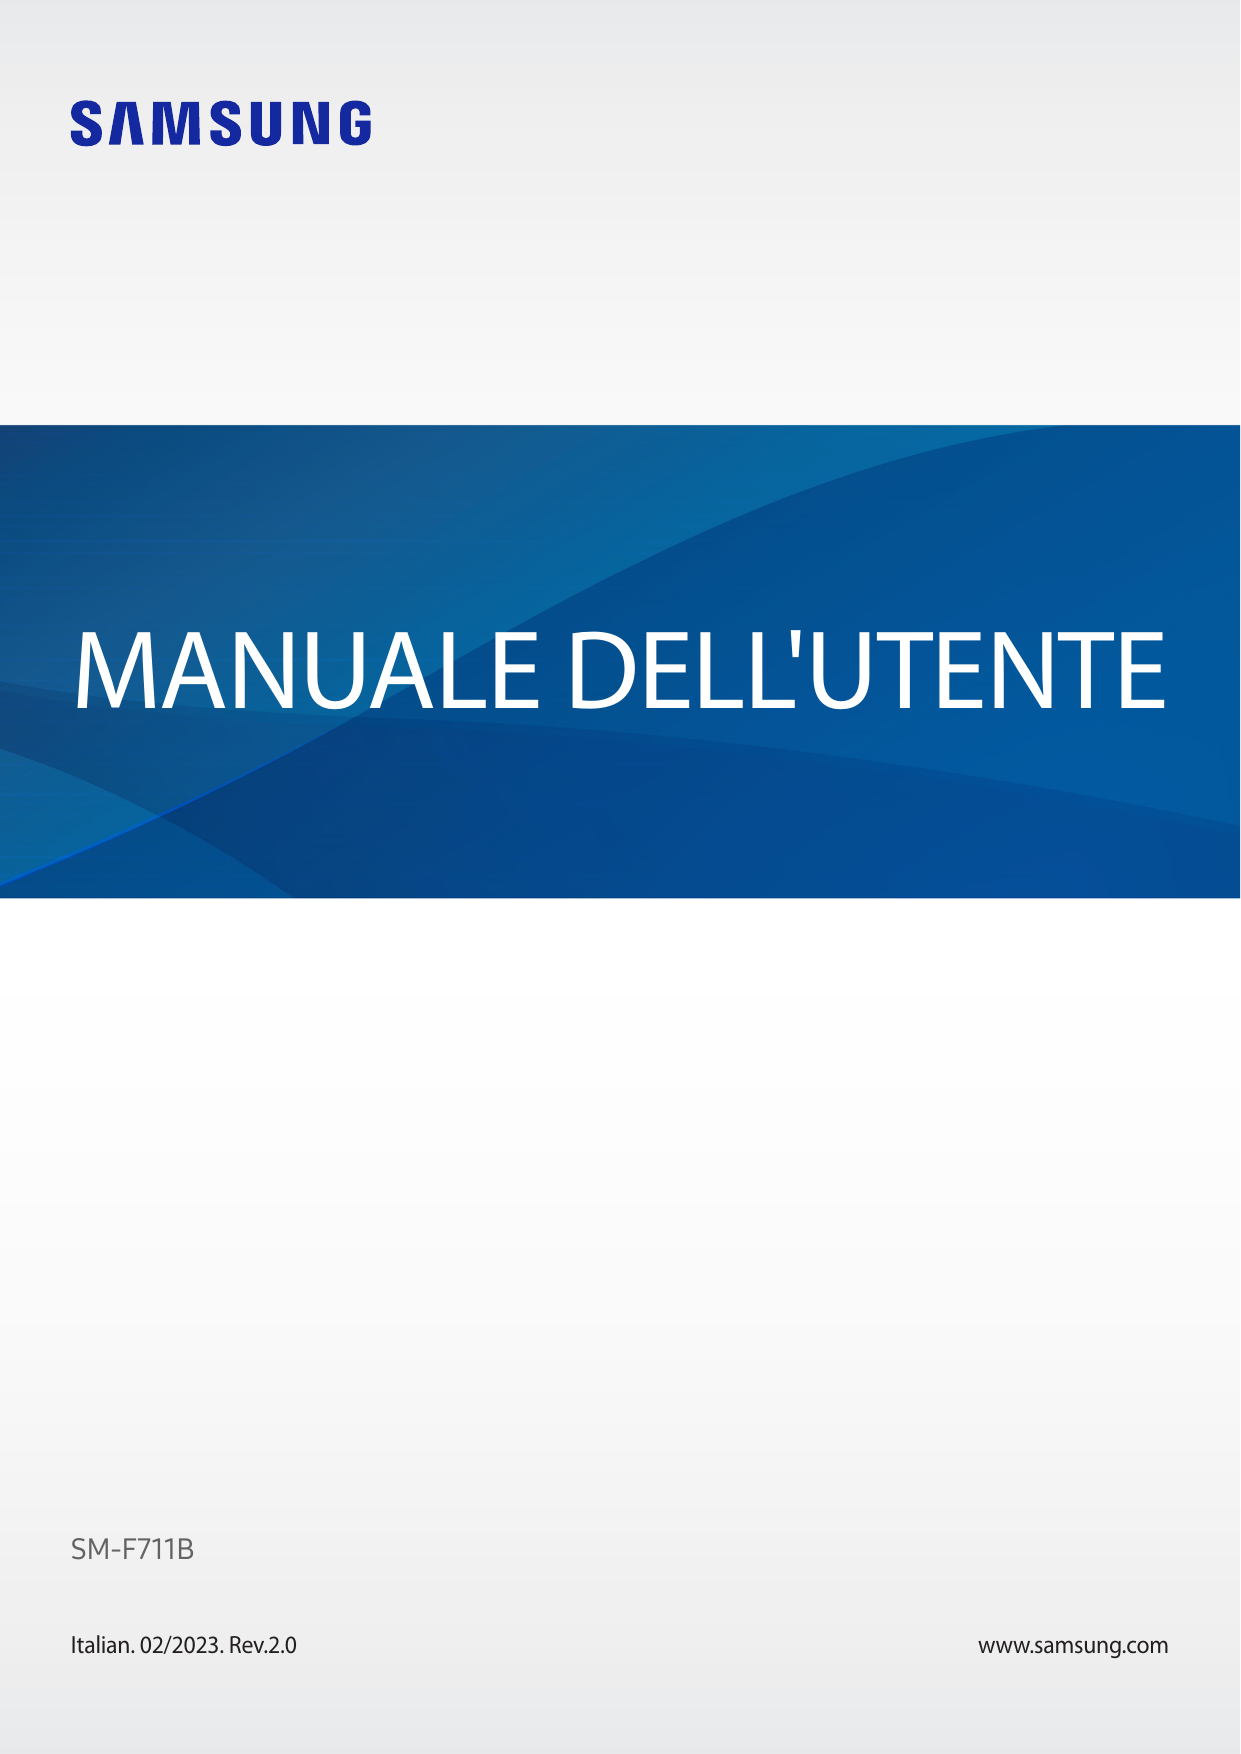 MANUALE DELL'UTENTESM-F711BItalian. 02/2023. Rev.2.0www.samsung.com